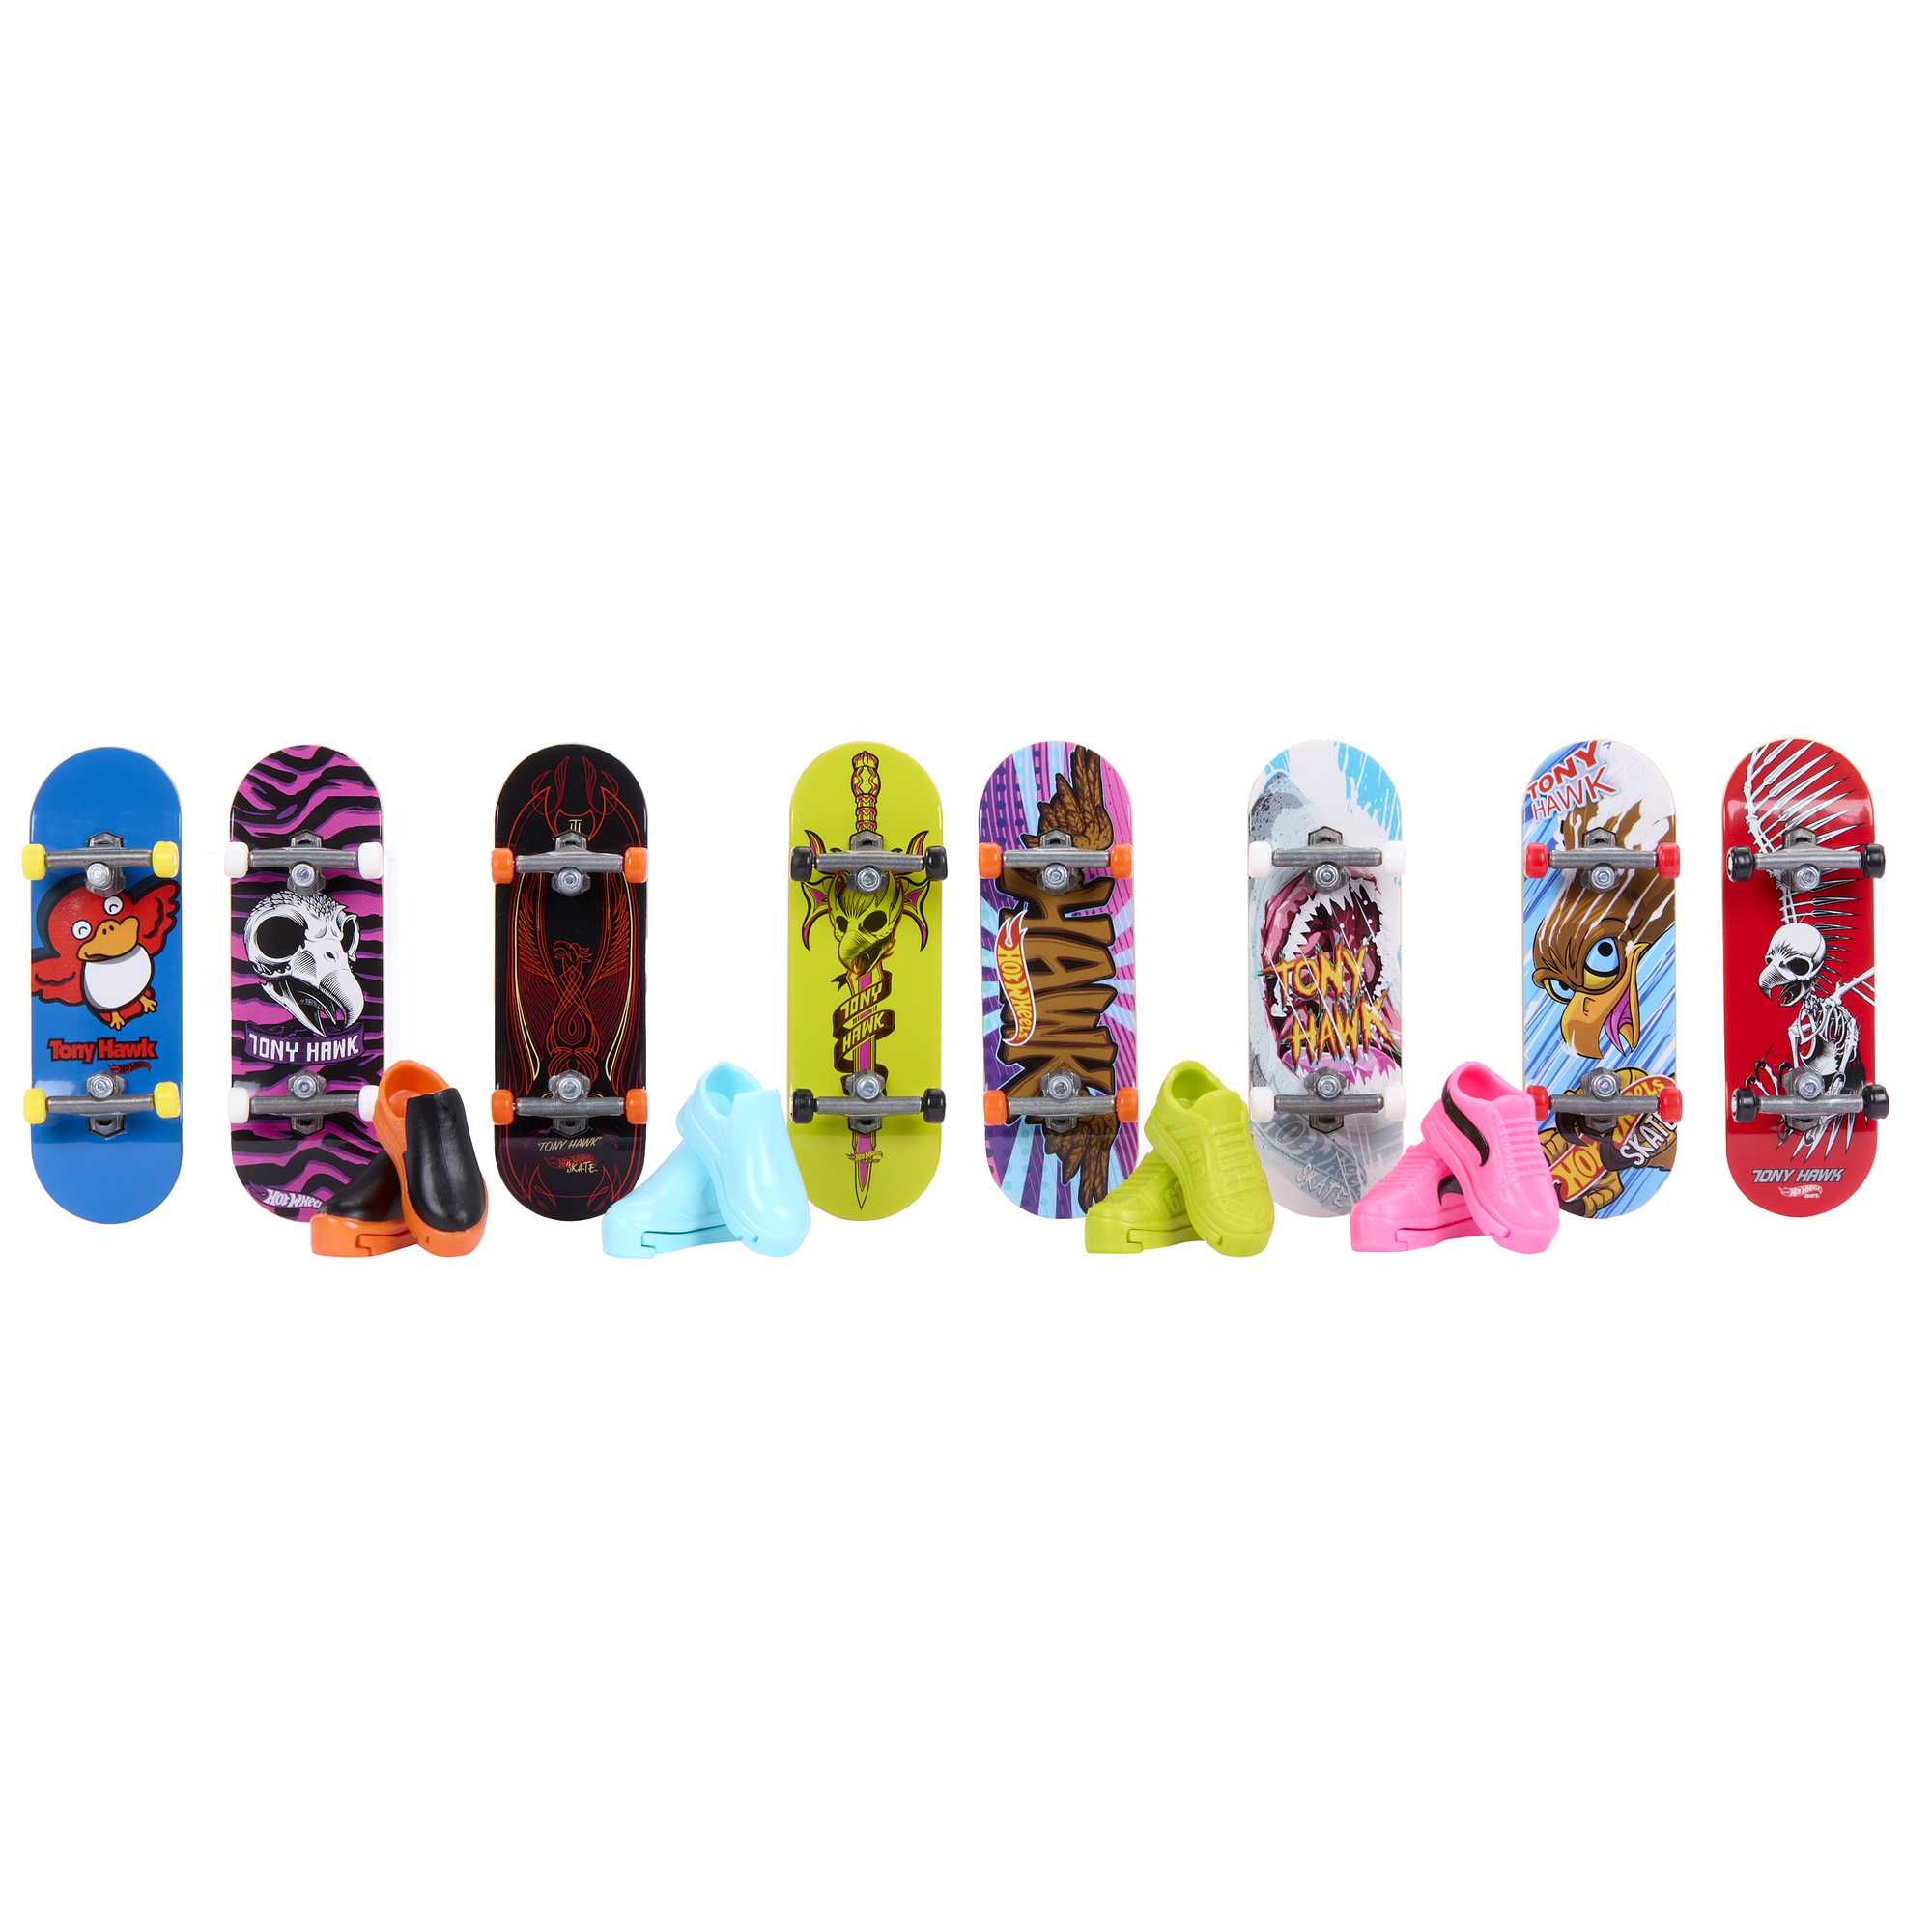 Hot Wheels-Skate-Fingerskate Tony Hawk-Pack fingerboards et chaussures |  Mattel